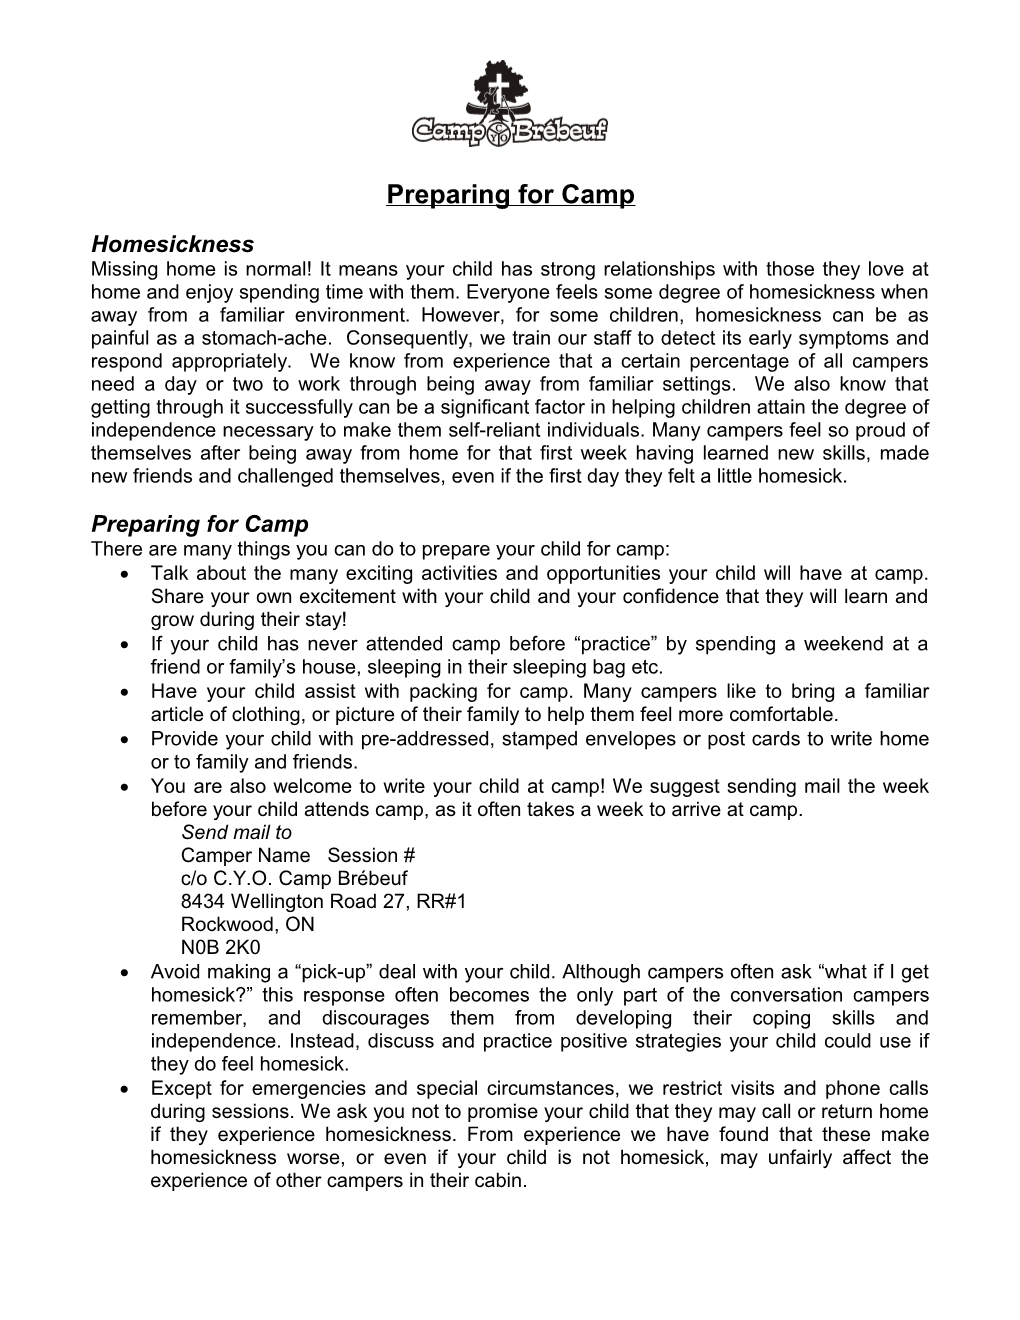 Camp Brebeuf 2004 - Important Information